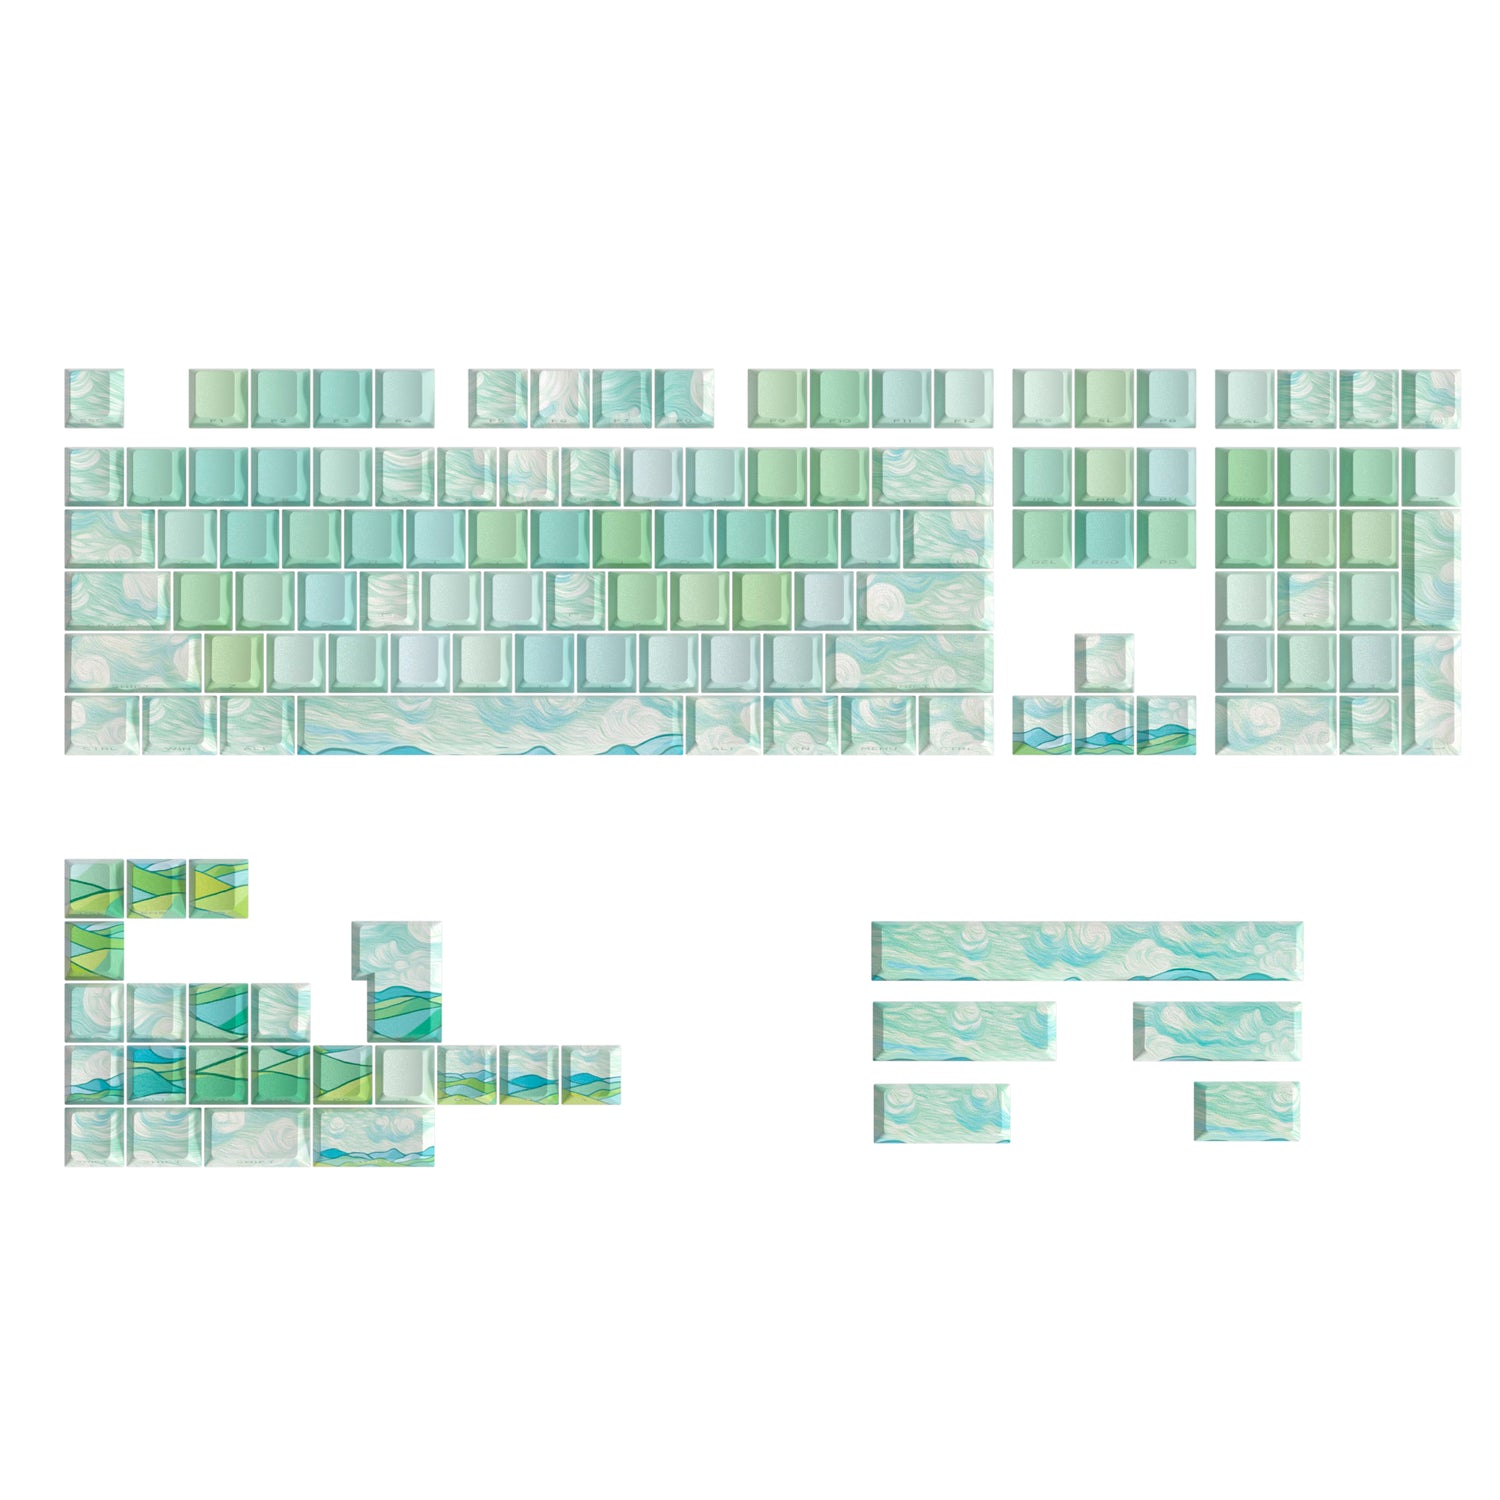 PIIFOX CKC-03 Green Wheat Field Pastel Painting Side-printed OEM Profile Keycap Set 135 Keys